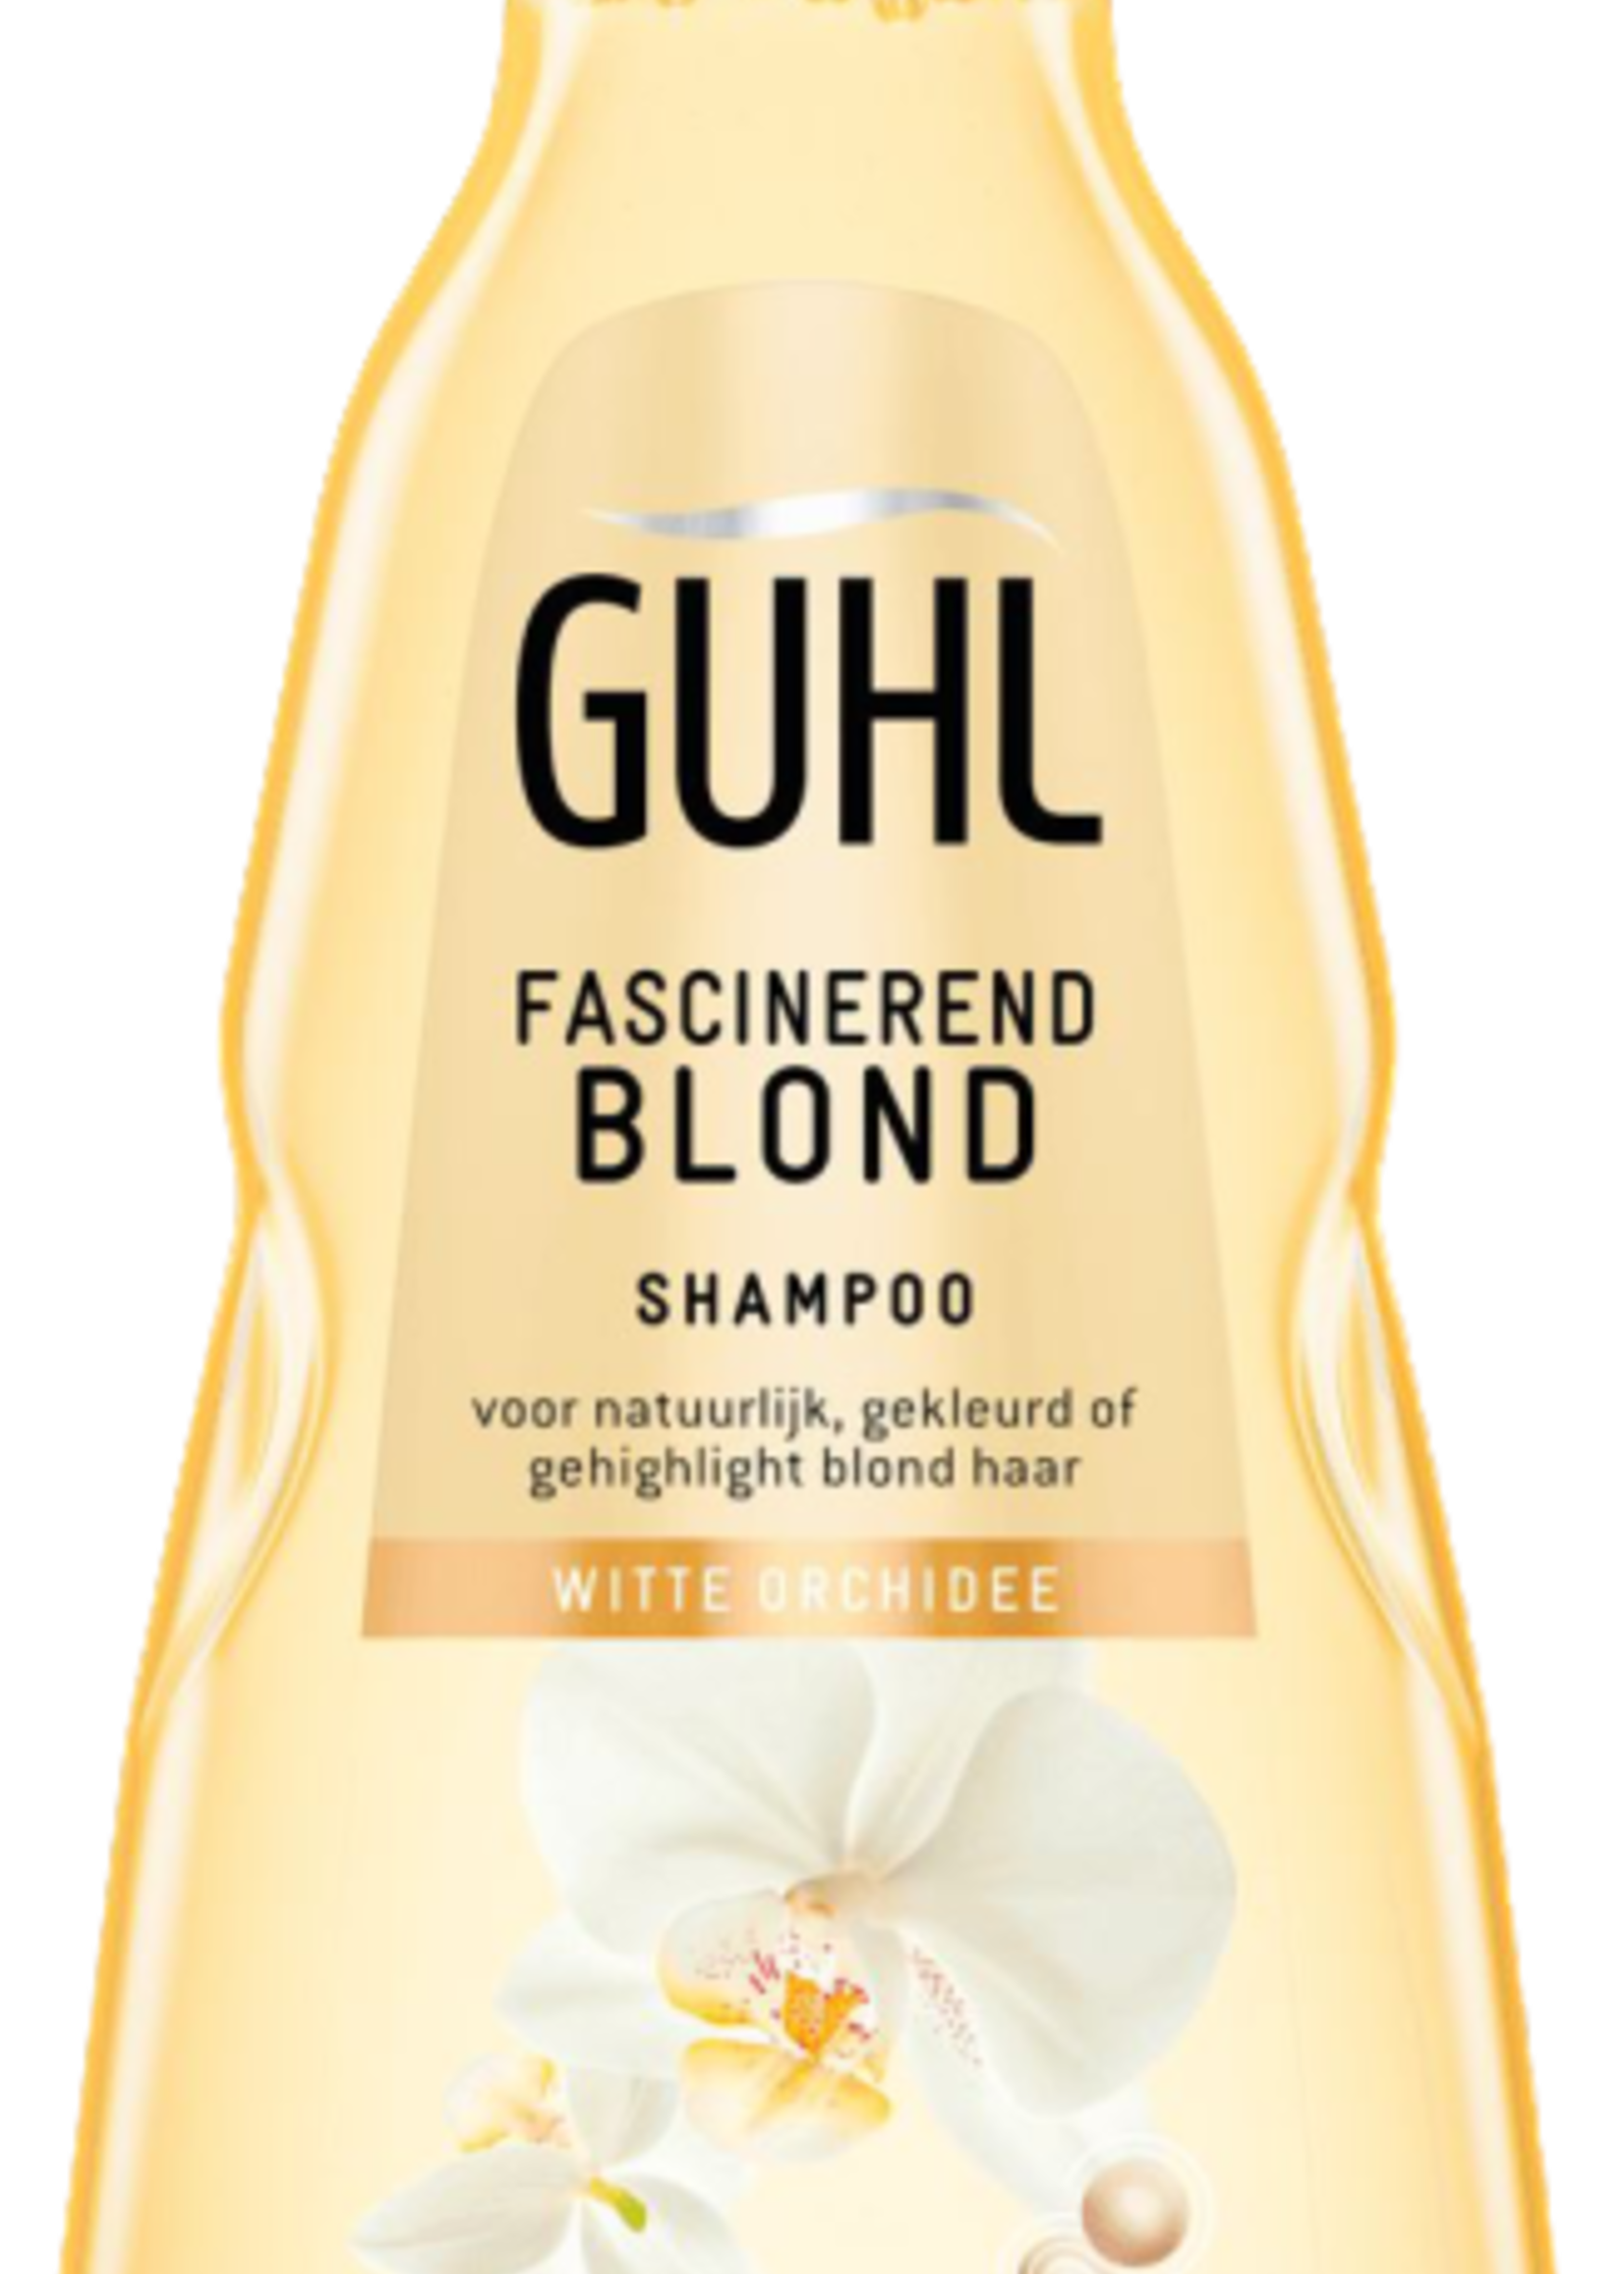 Guhl Fascinerend Blond Shampoo 250ml